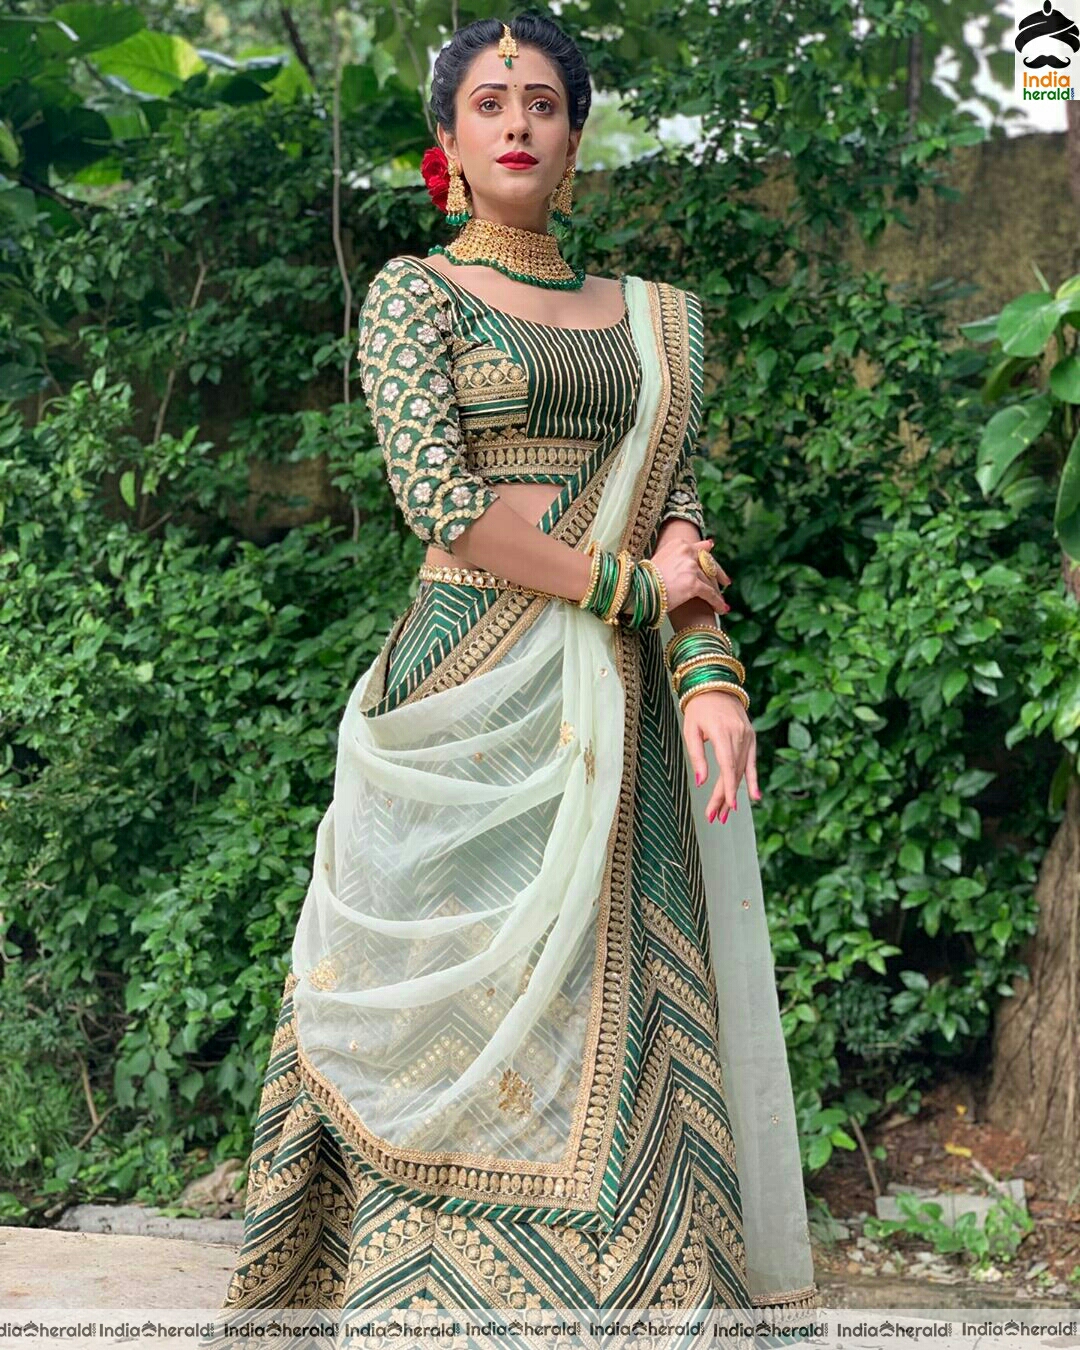 Hiba Nawab Cute In Green Traditional Dress Photoshoot